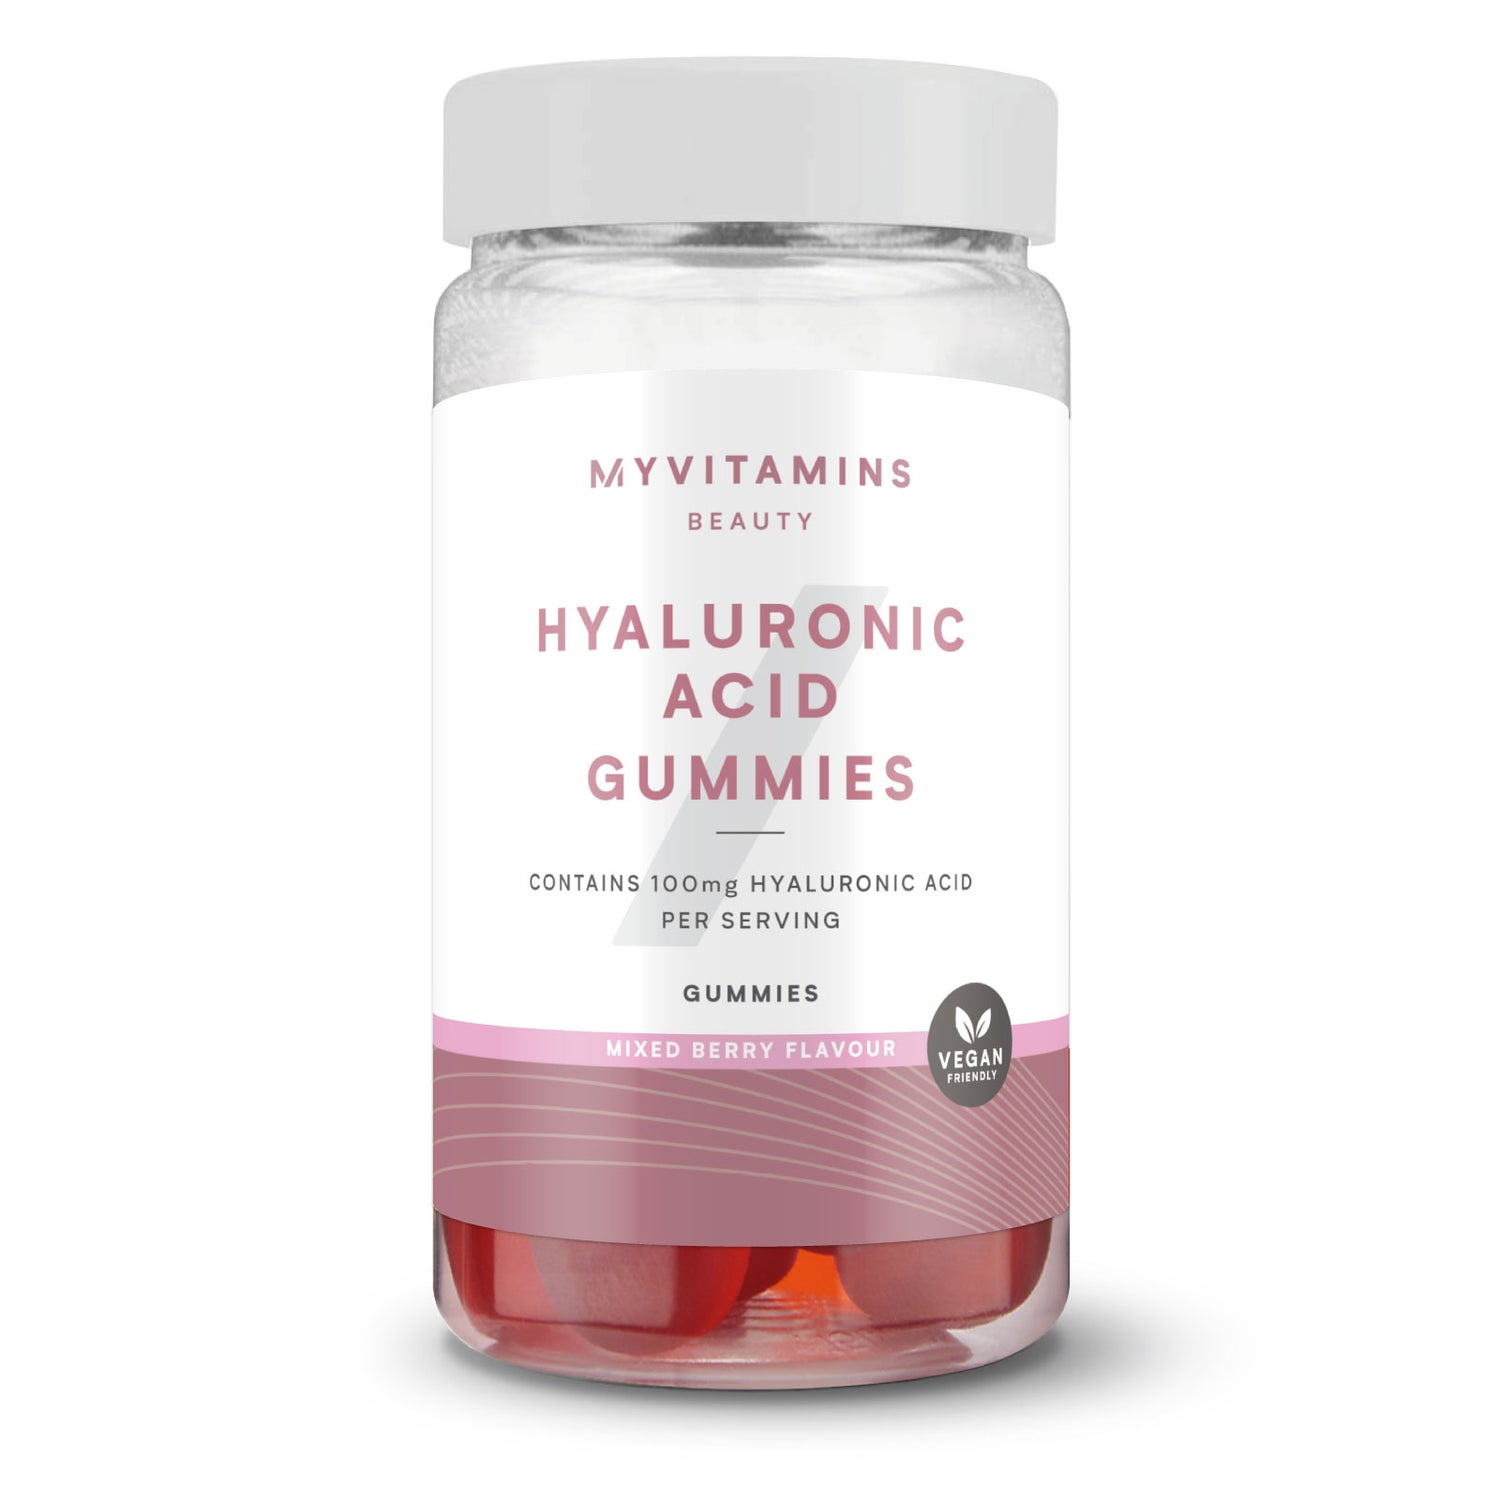 Myvitamins Hyaluronic Acid Gummies